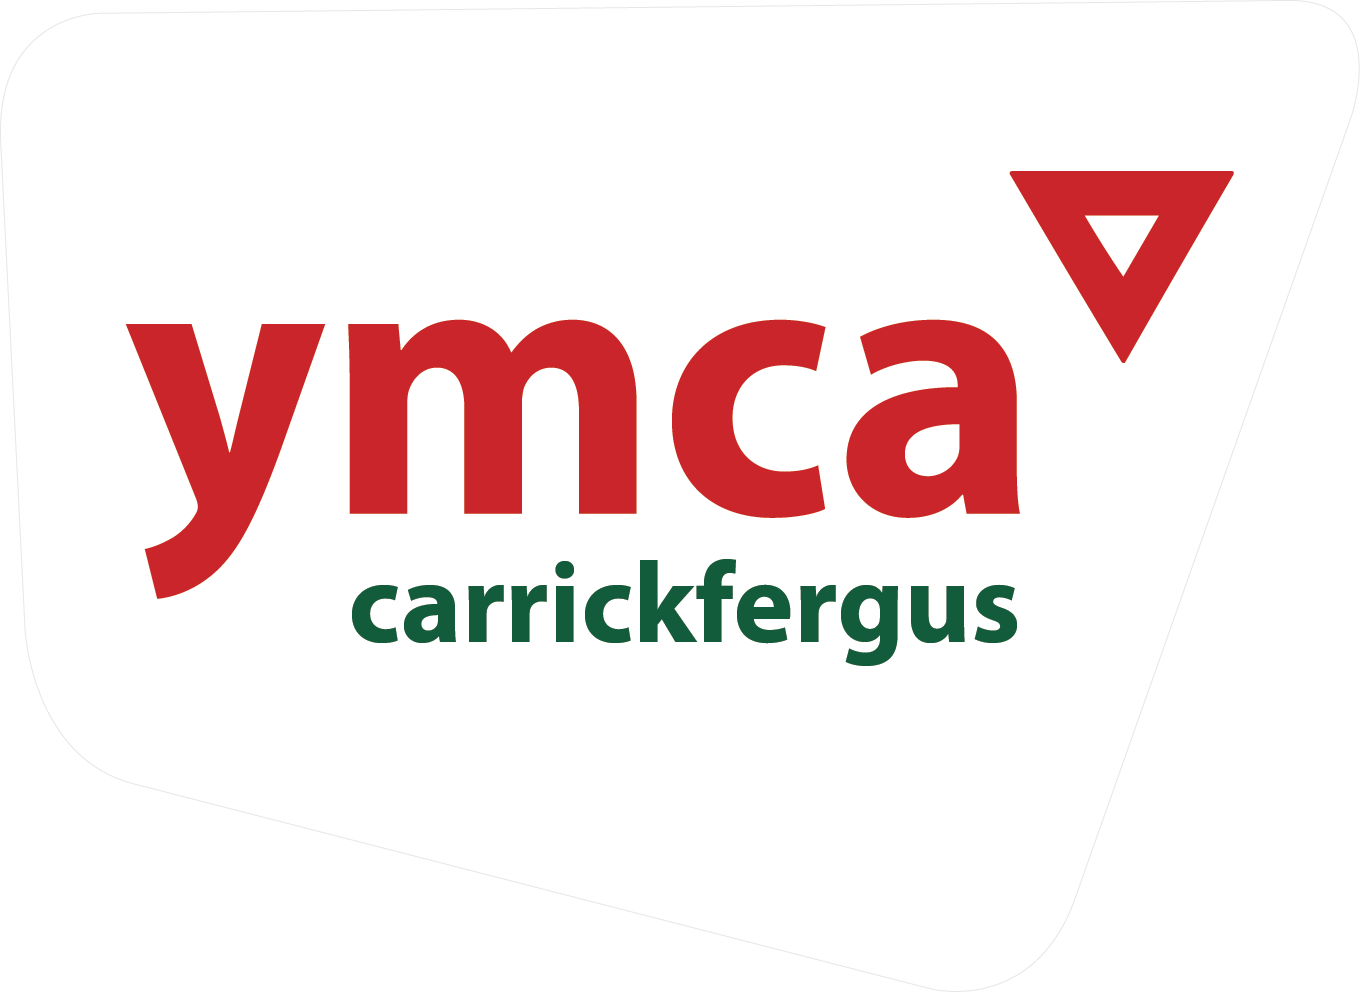 YMCA Carrickfergus